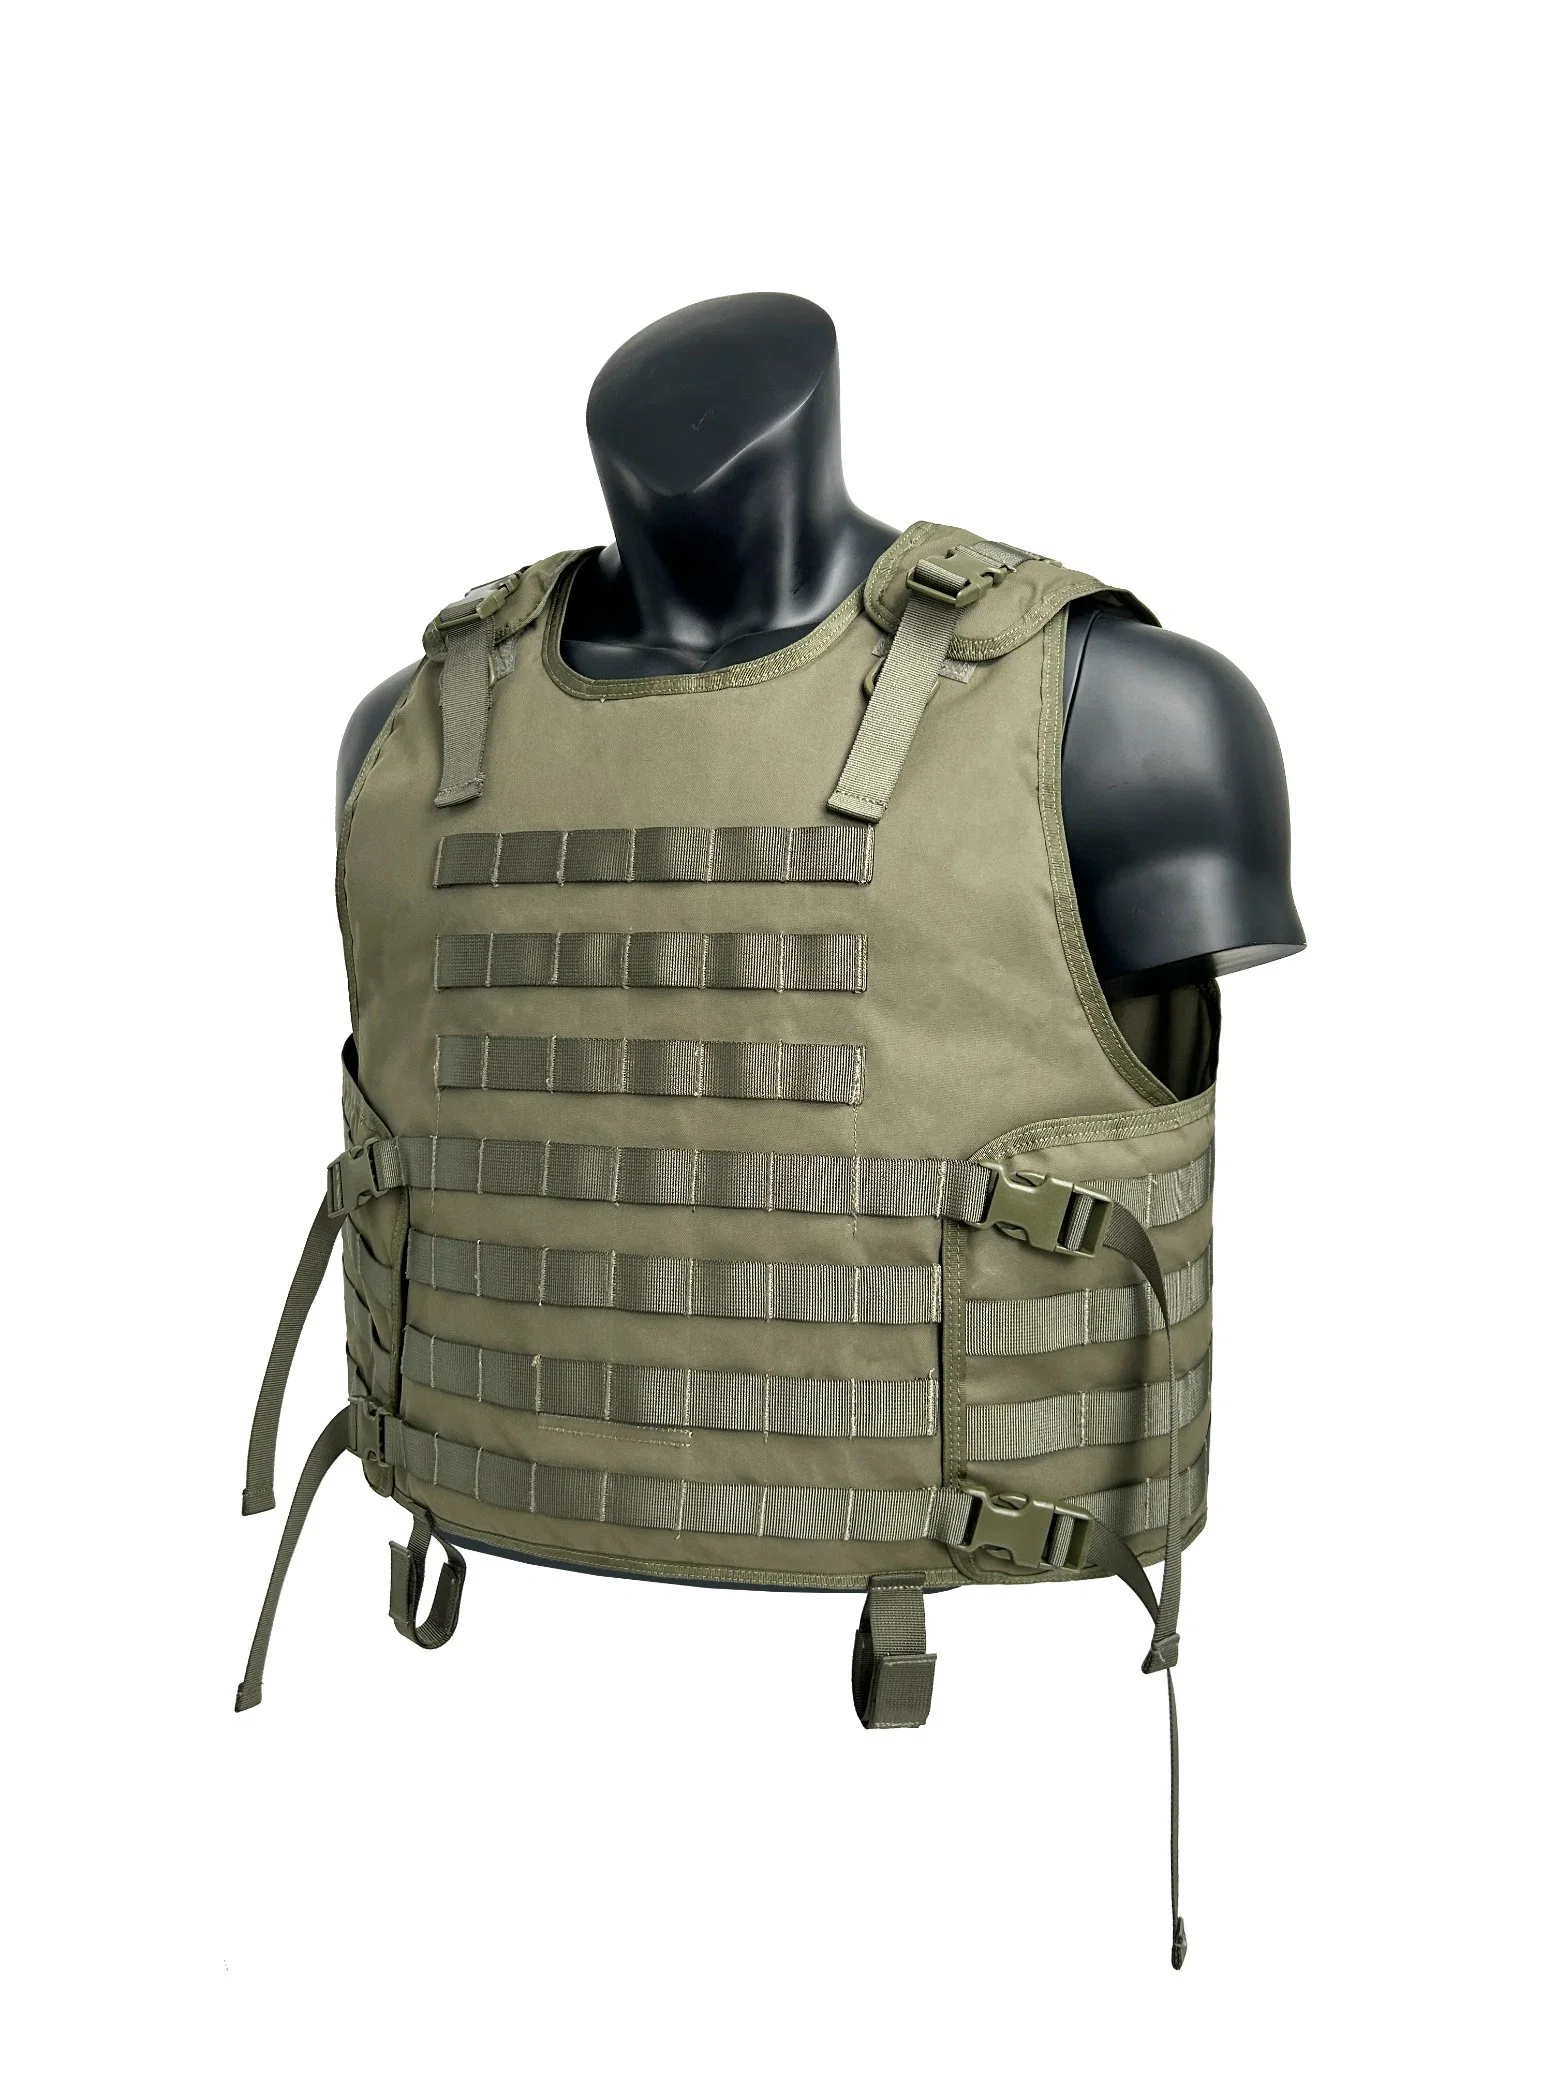 China Products/Suppliers. Custom Military Nij Iiia Tactical Outdoor Peud Ballistic Body Armor Bulletproof Vest